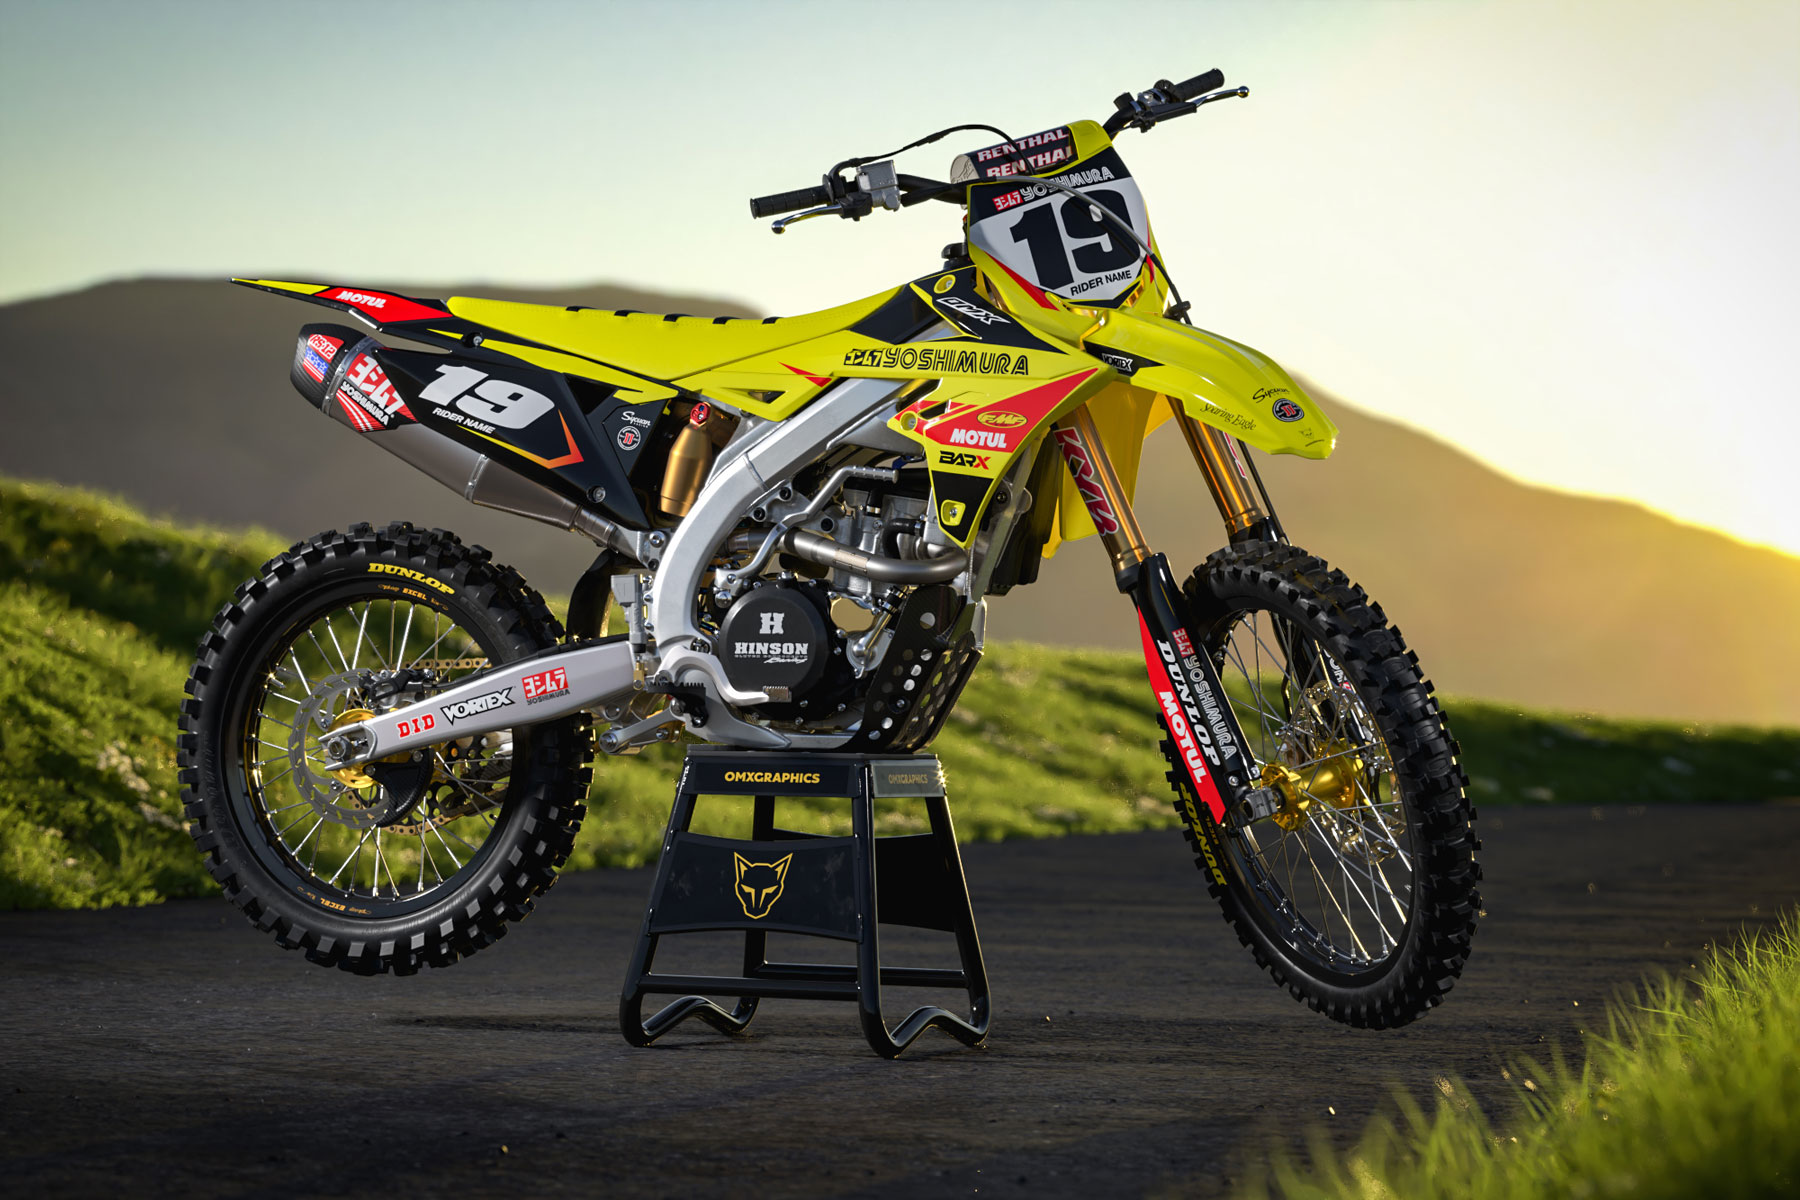 Motocross Graphics For Suzuki Competition Yellow Promo